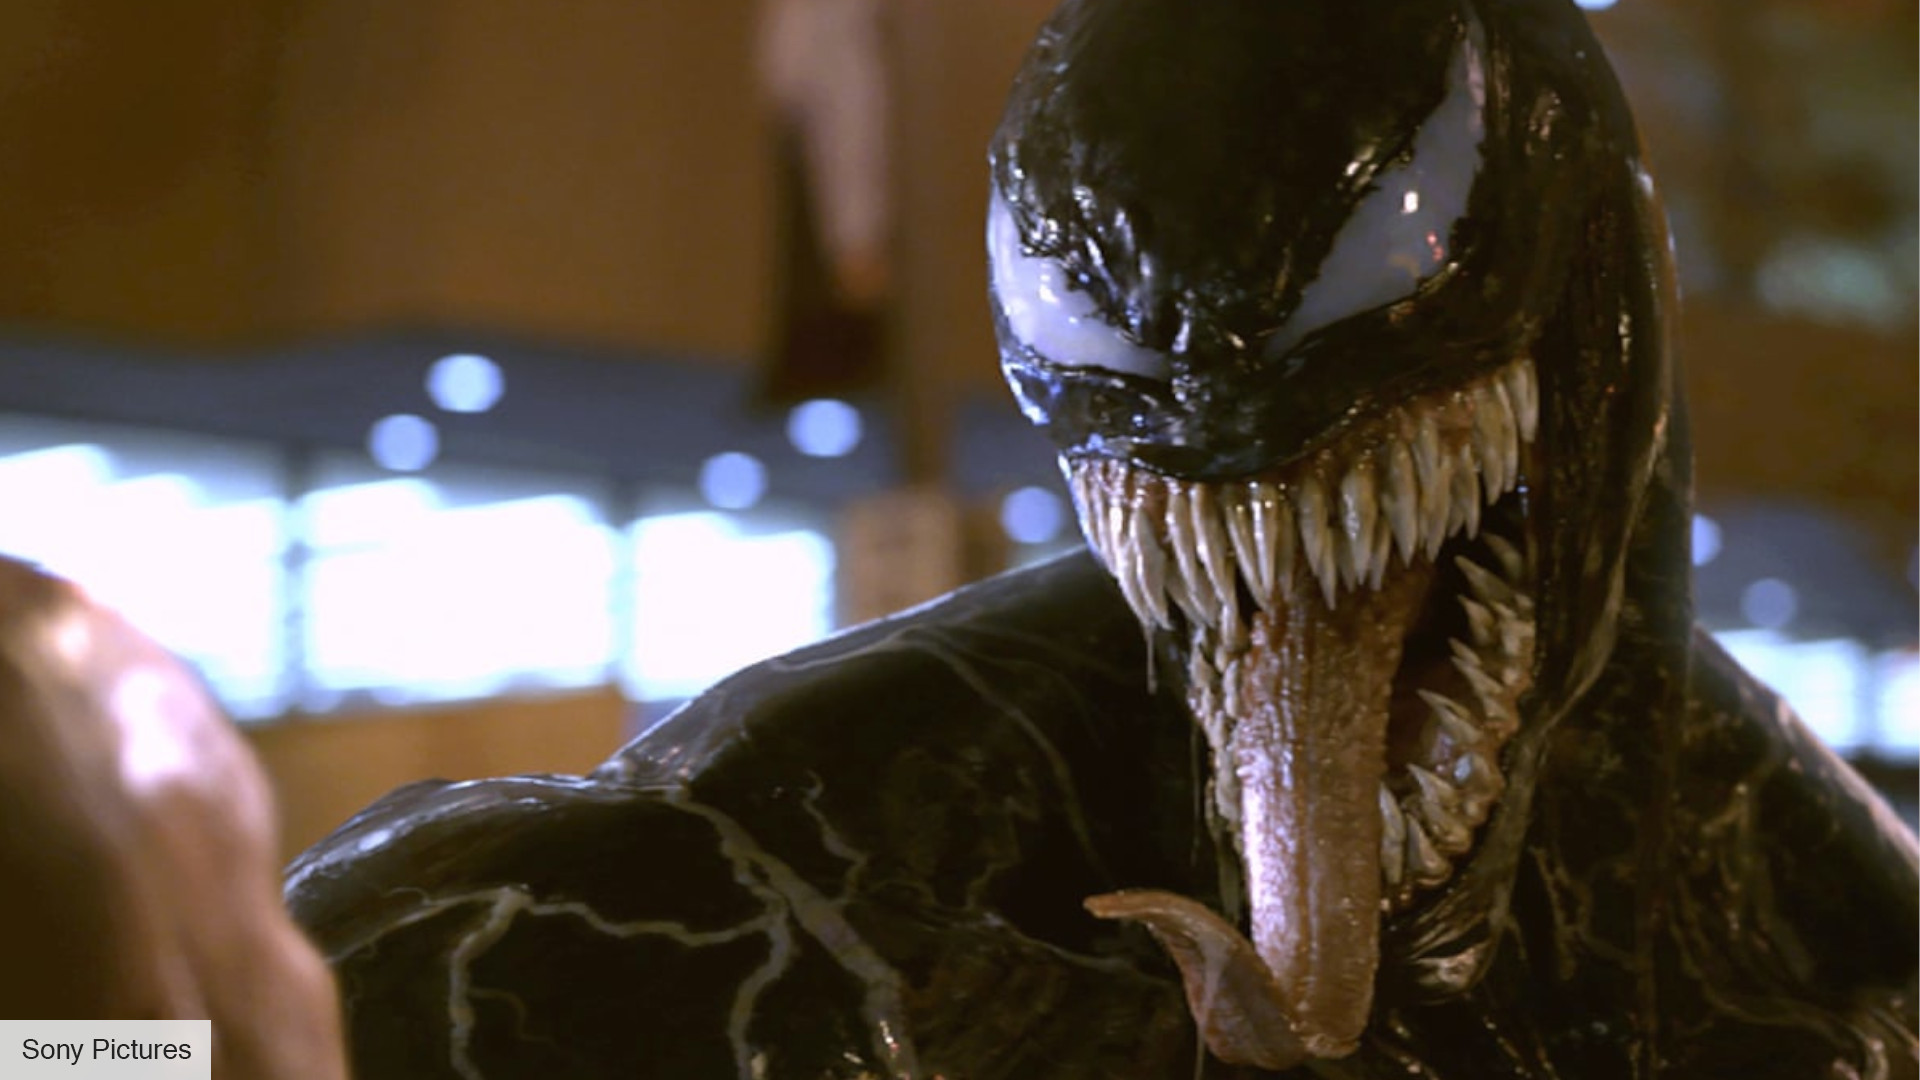 Venom 3 release date speculation, trailer, cast, and more The Digital Fix